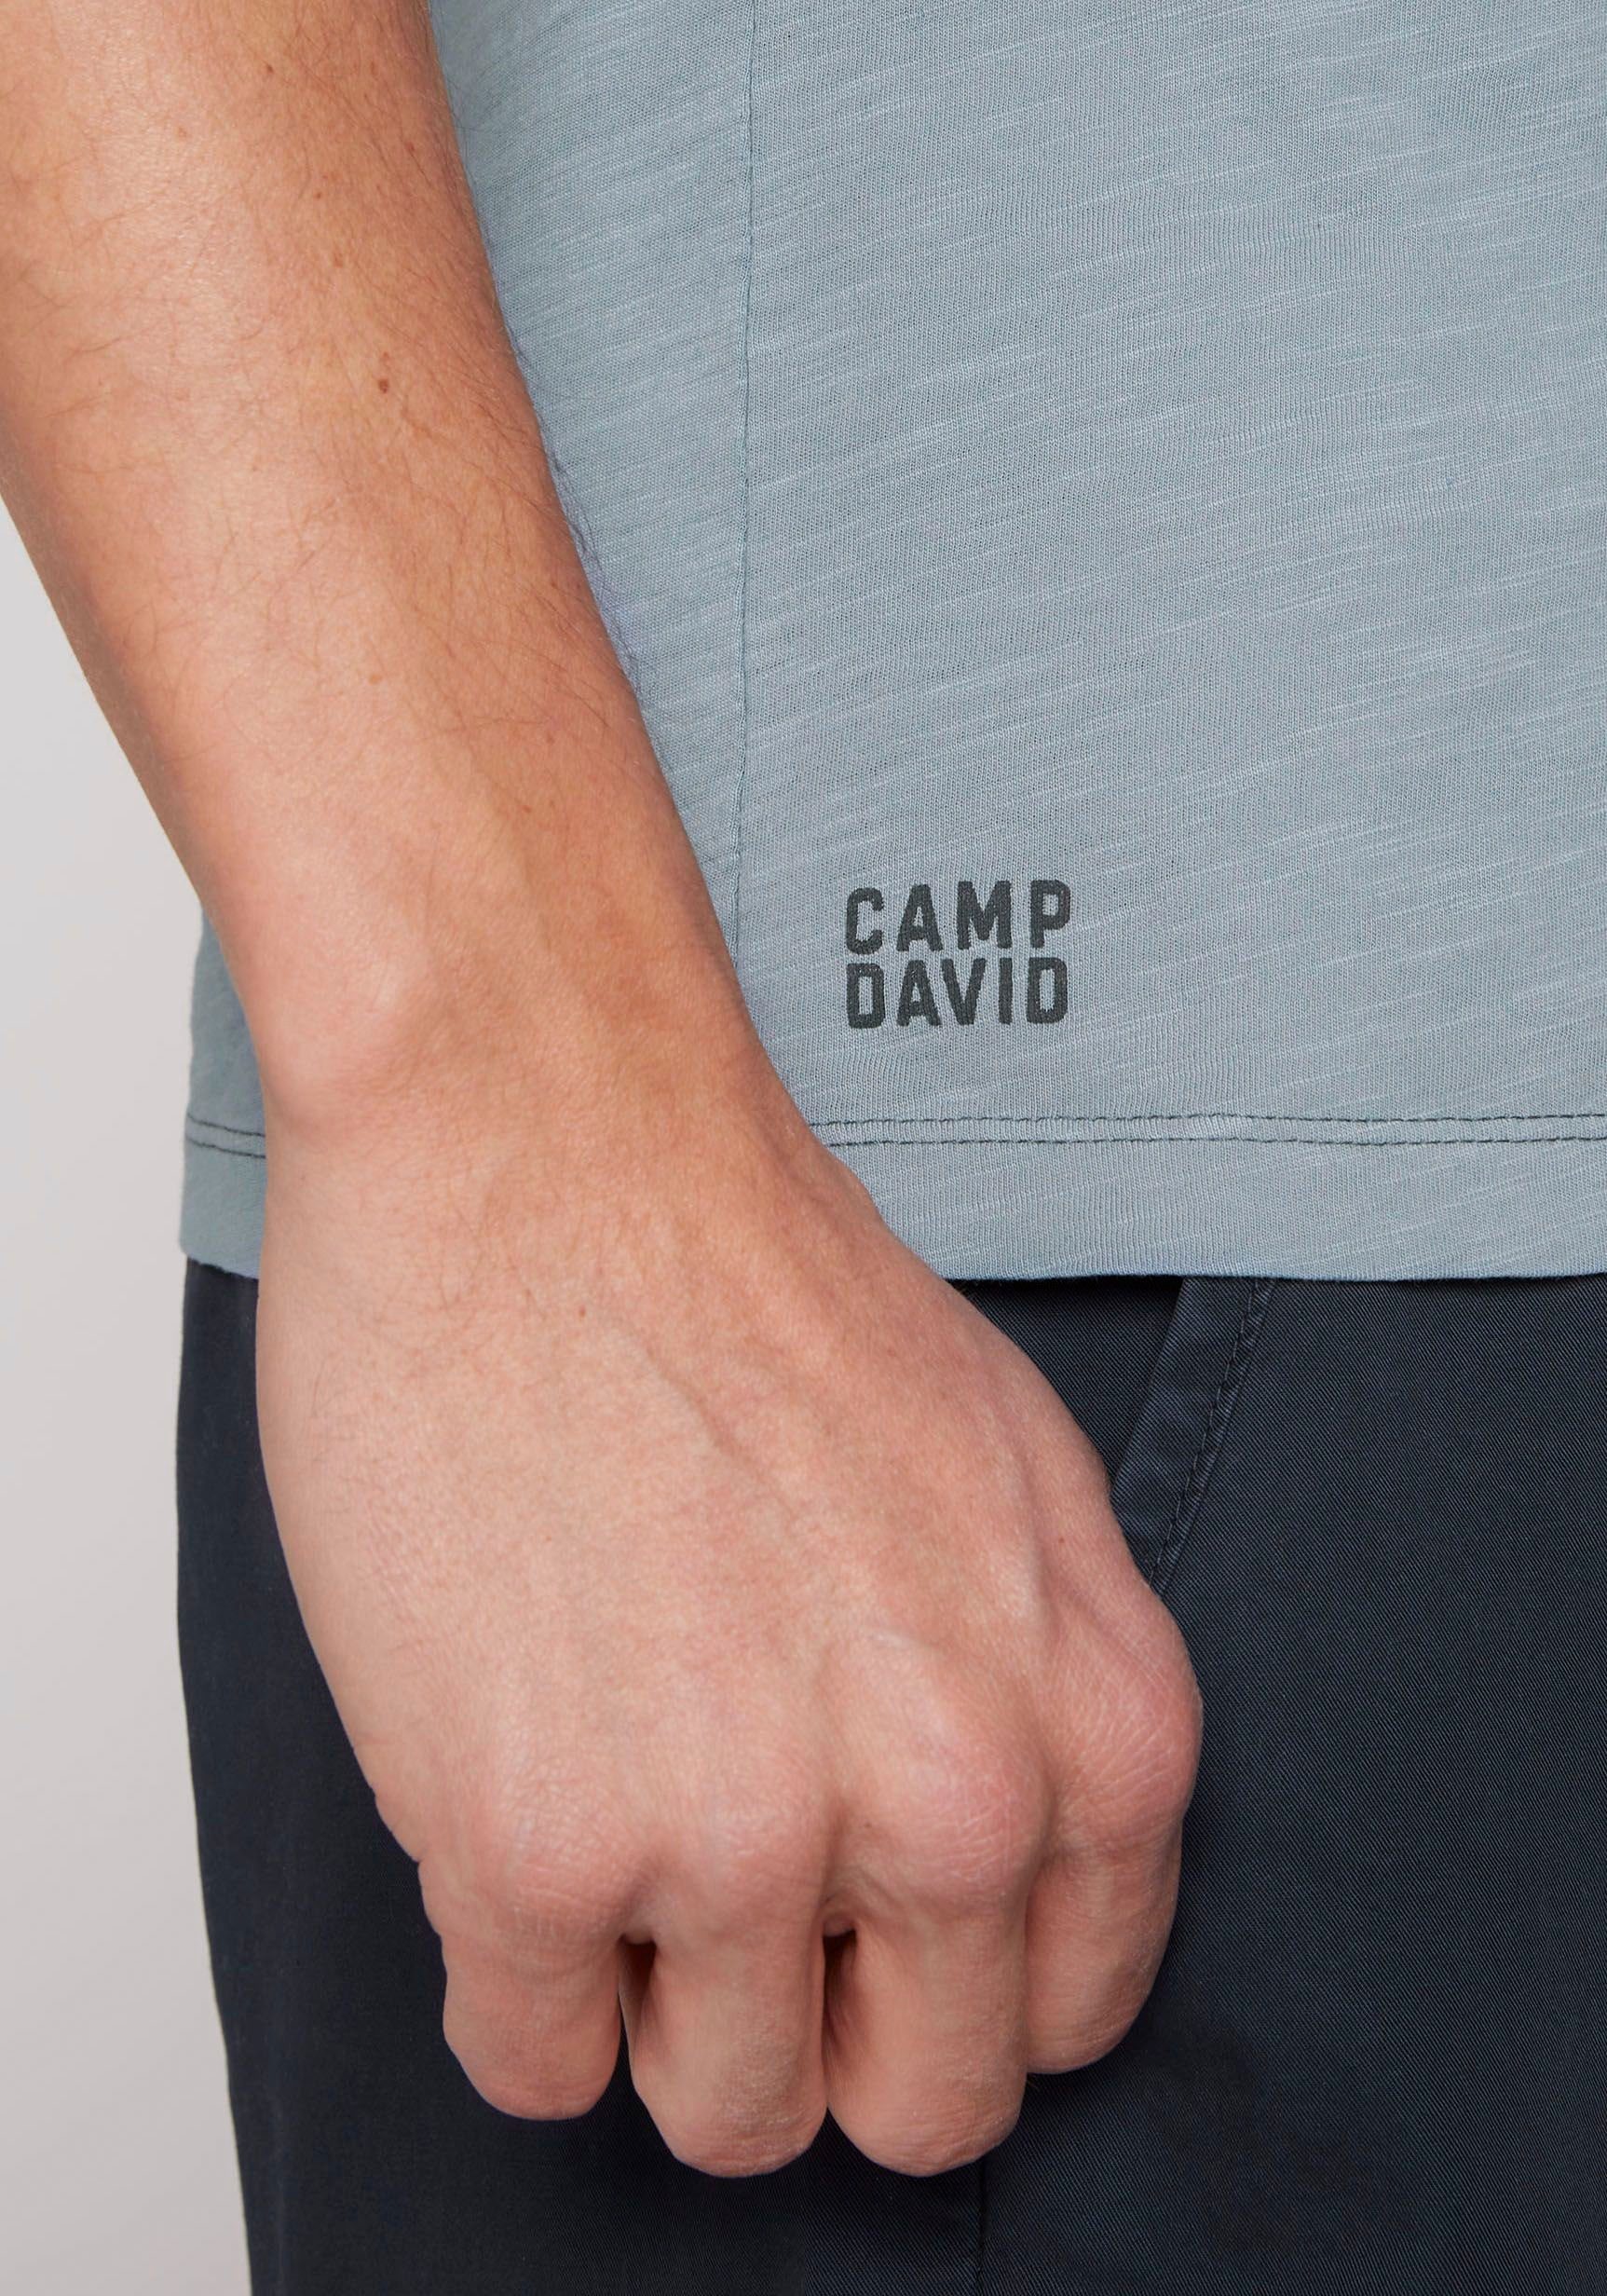 grey DAVID T-Shirt concrete mit Logoprägung CAMP